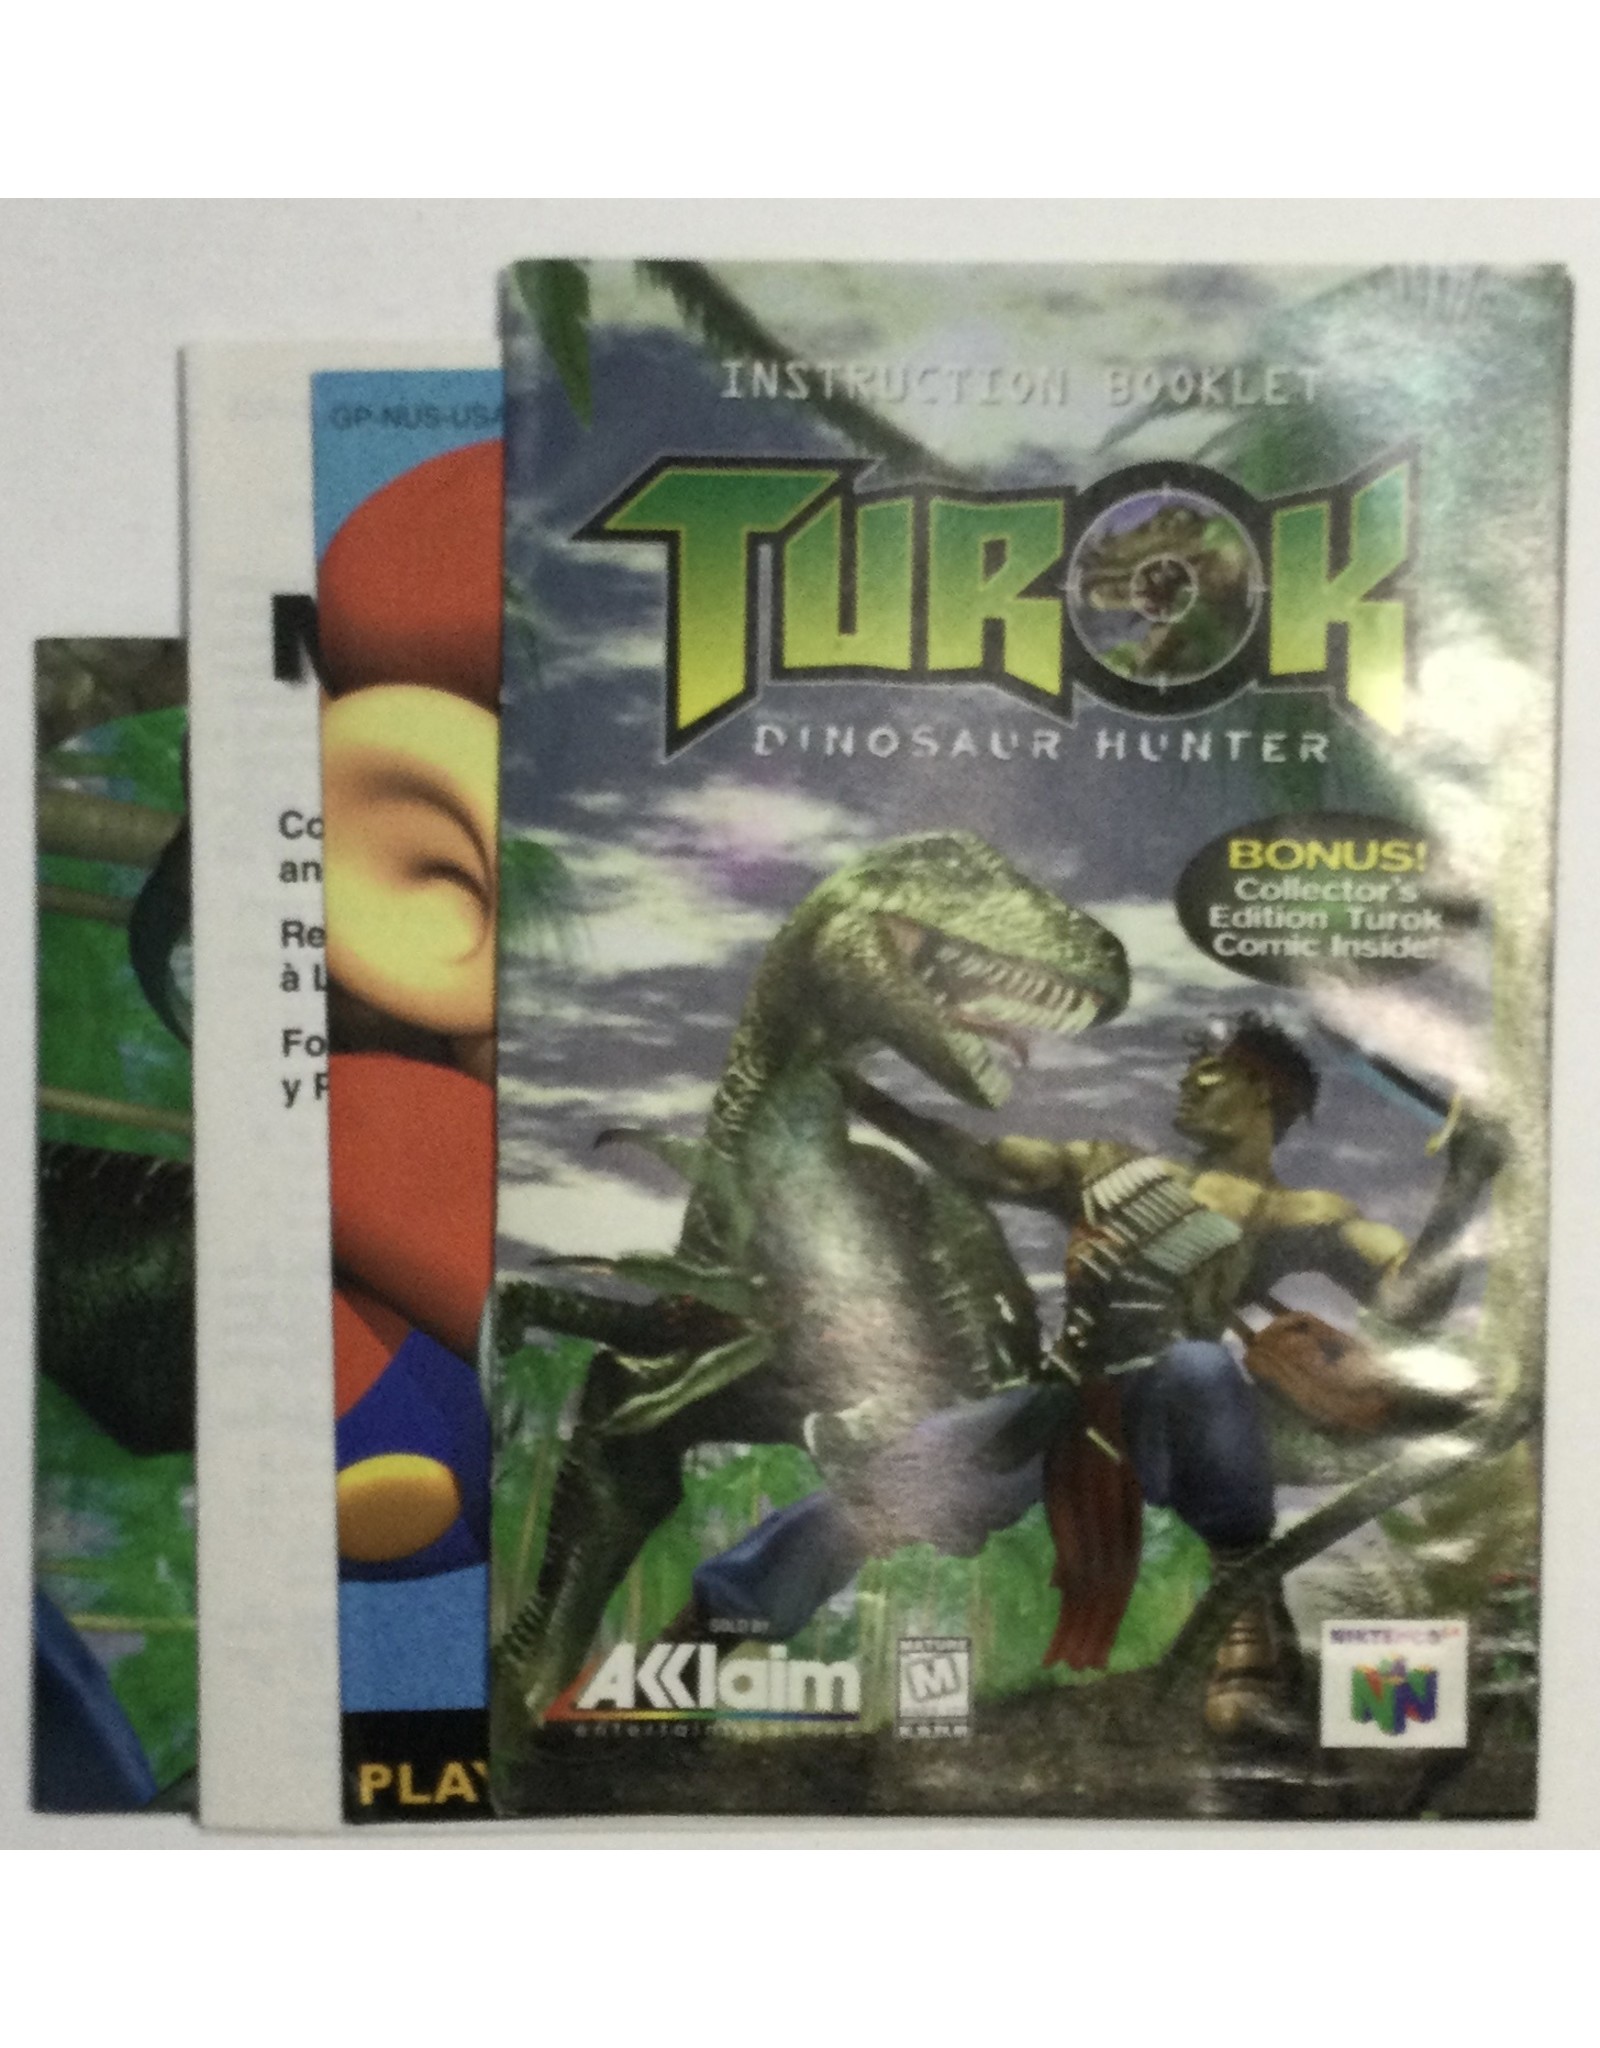 ACCLAIM Turok Dinosaur Hunter for Nintendo 64 (N64) - CIB